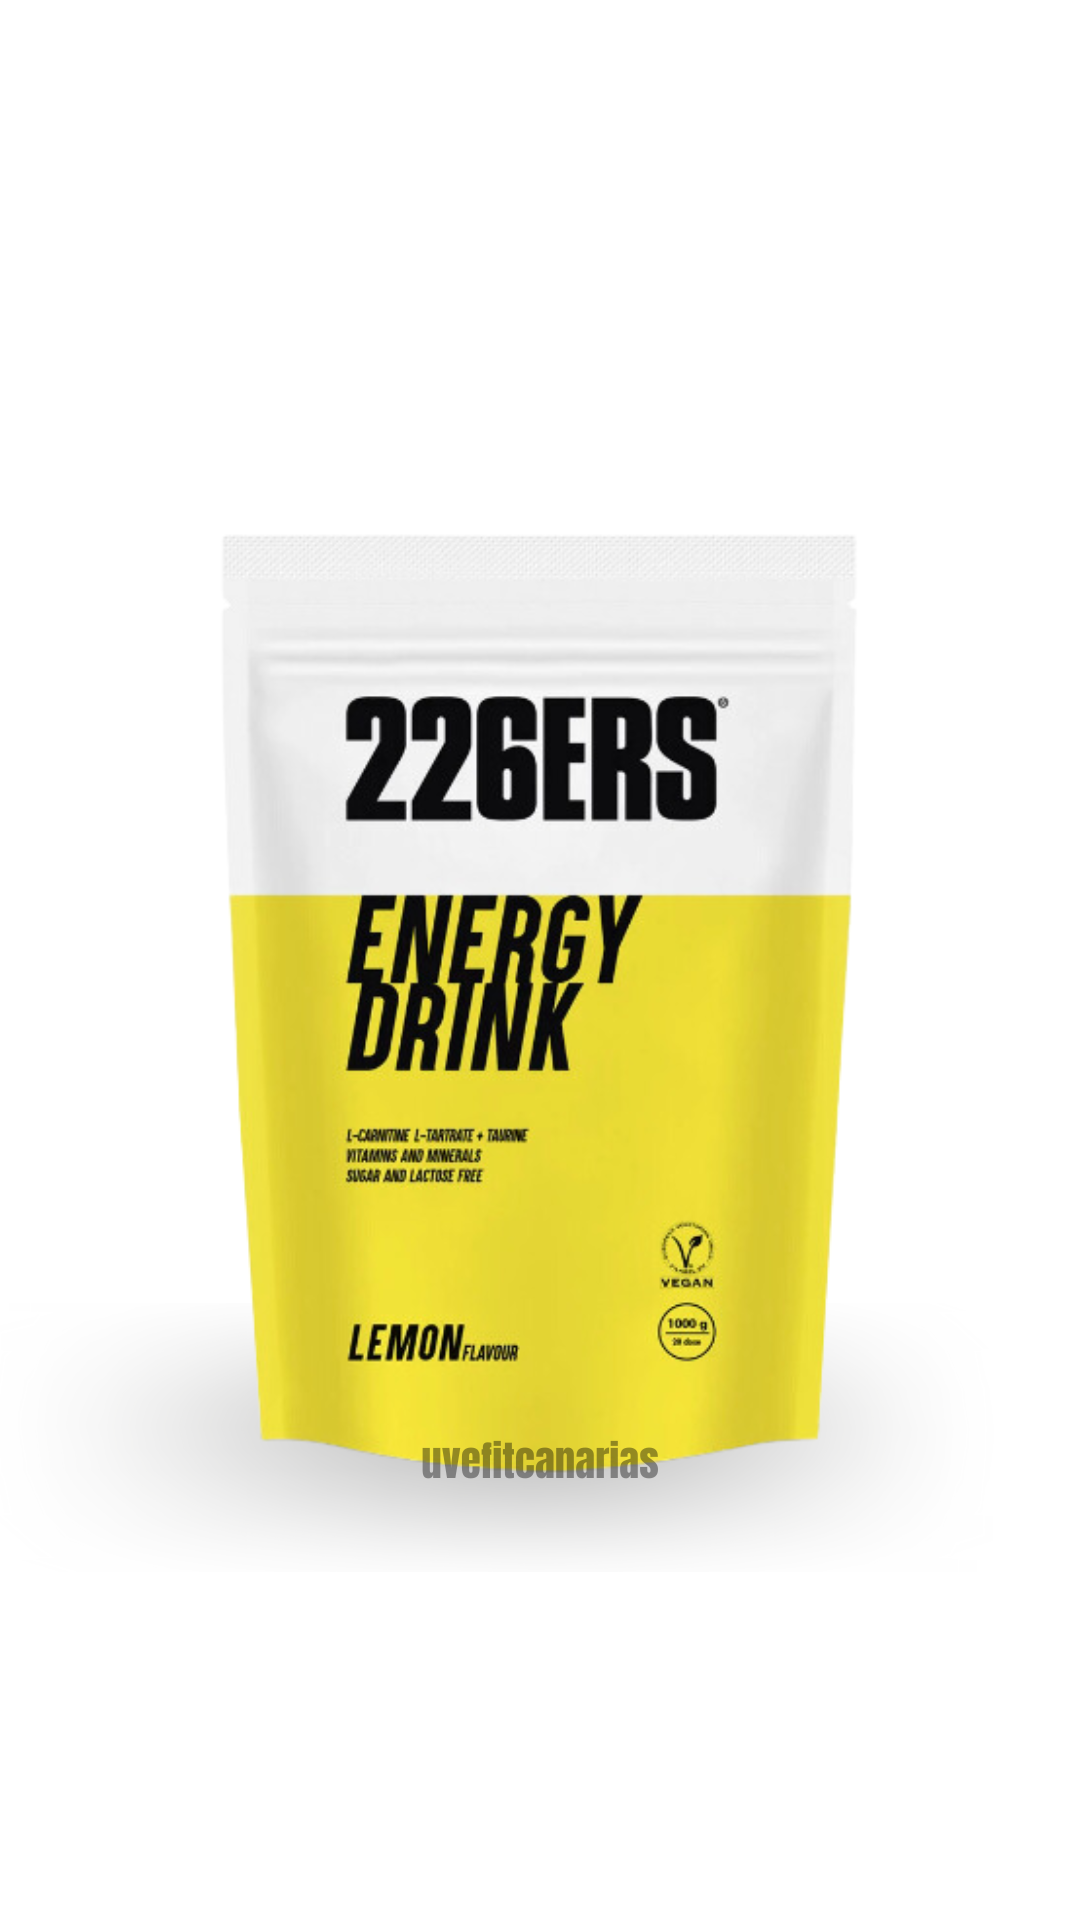 Energy drink, Limón, 1 kg- 226ERS